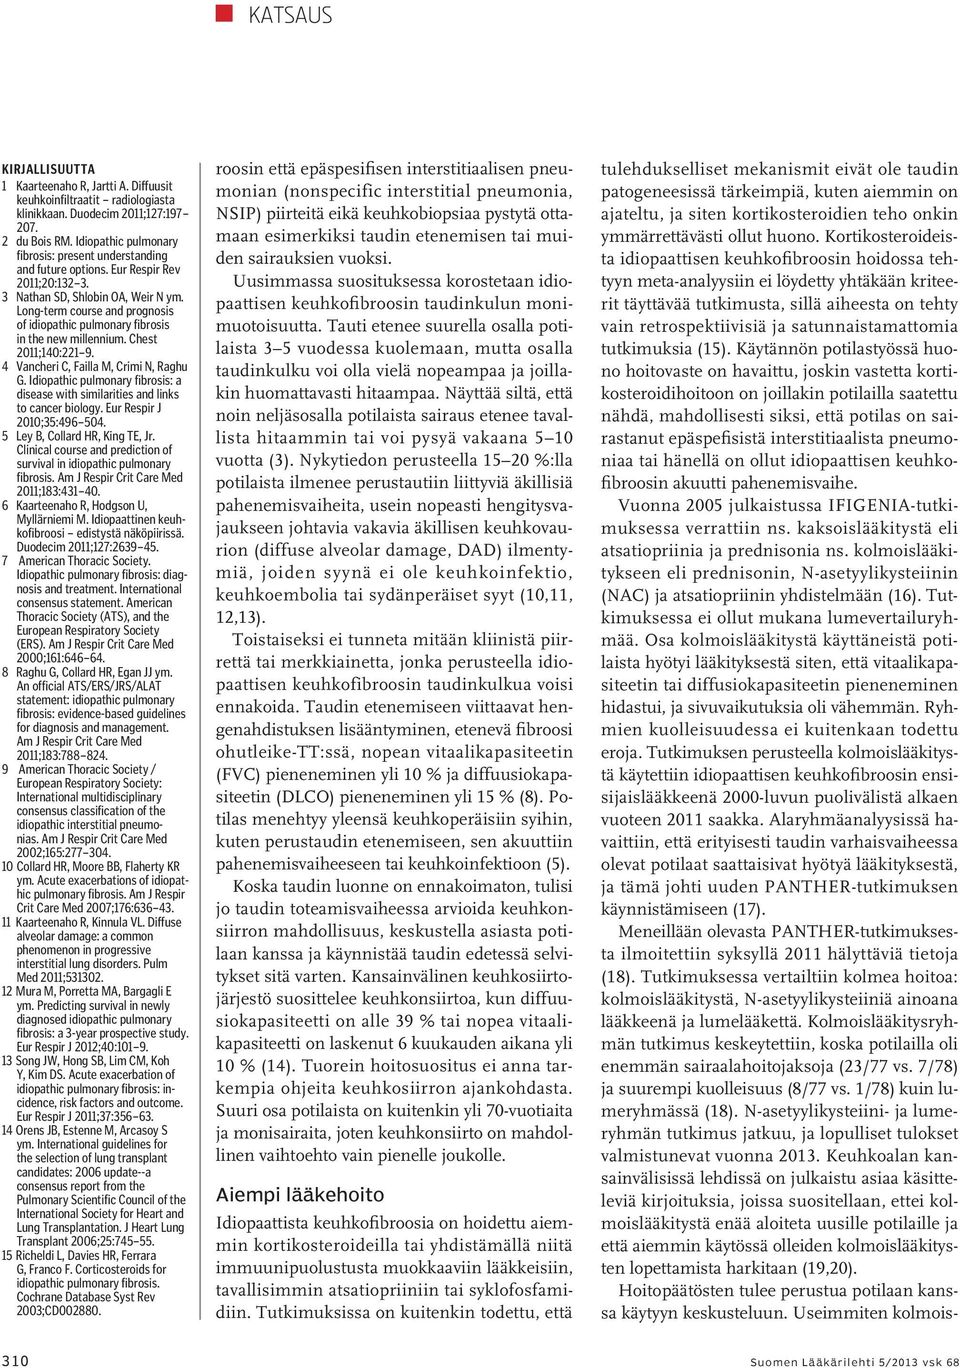 Long-term course and prognosis of idiopathic pulmonary fibrosis in the new millennium. Chest 2011;140:221 9. 4 Vancheri C, Failla M, Crimi N, Raghu G.